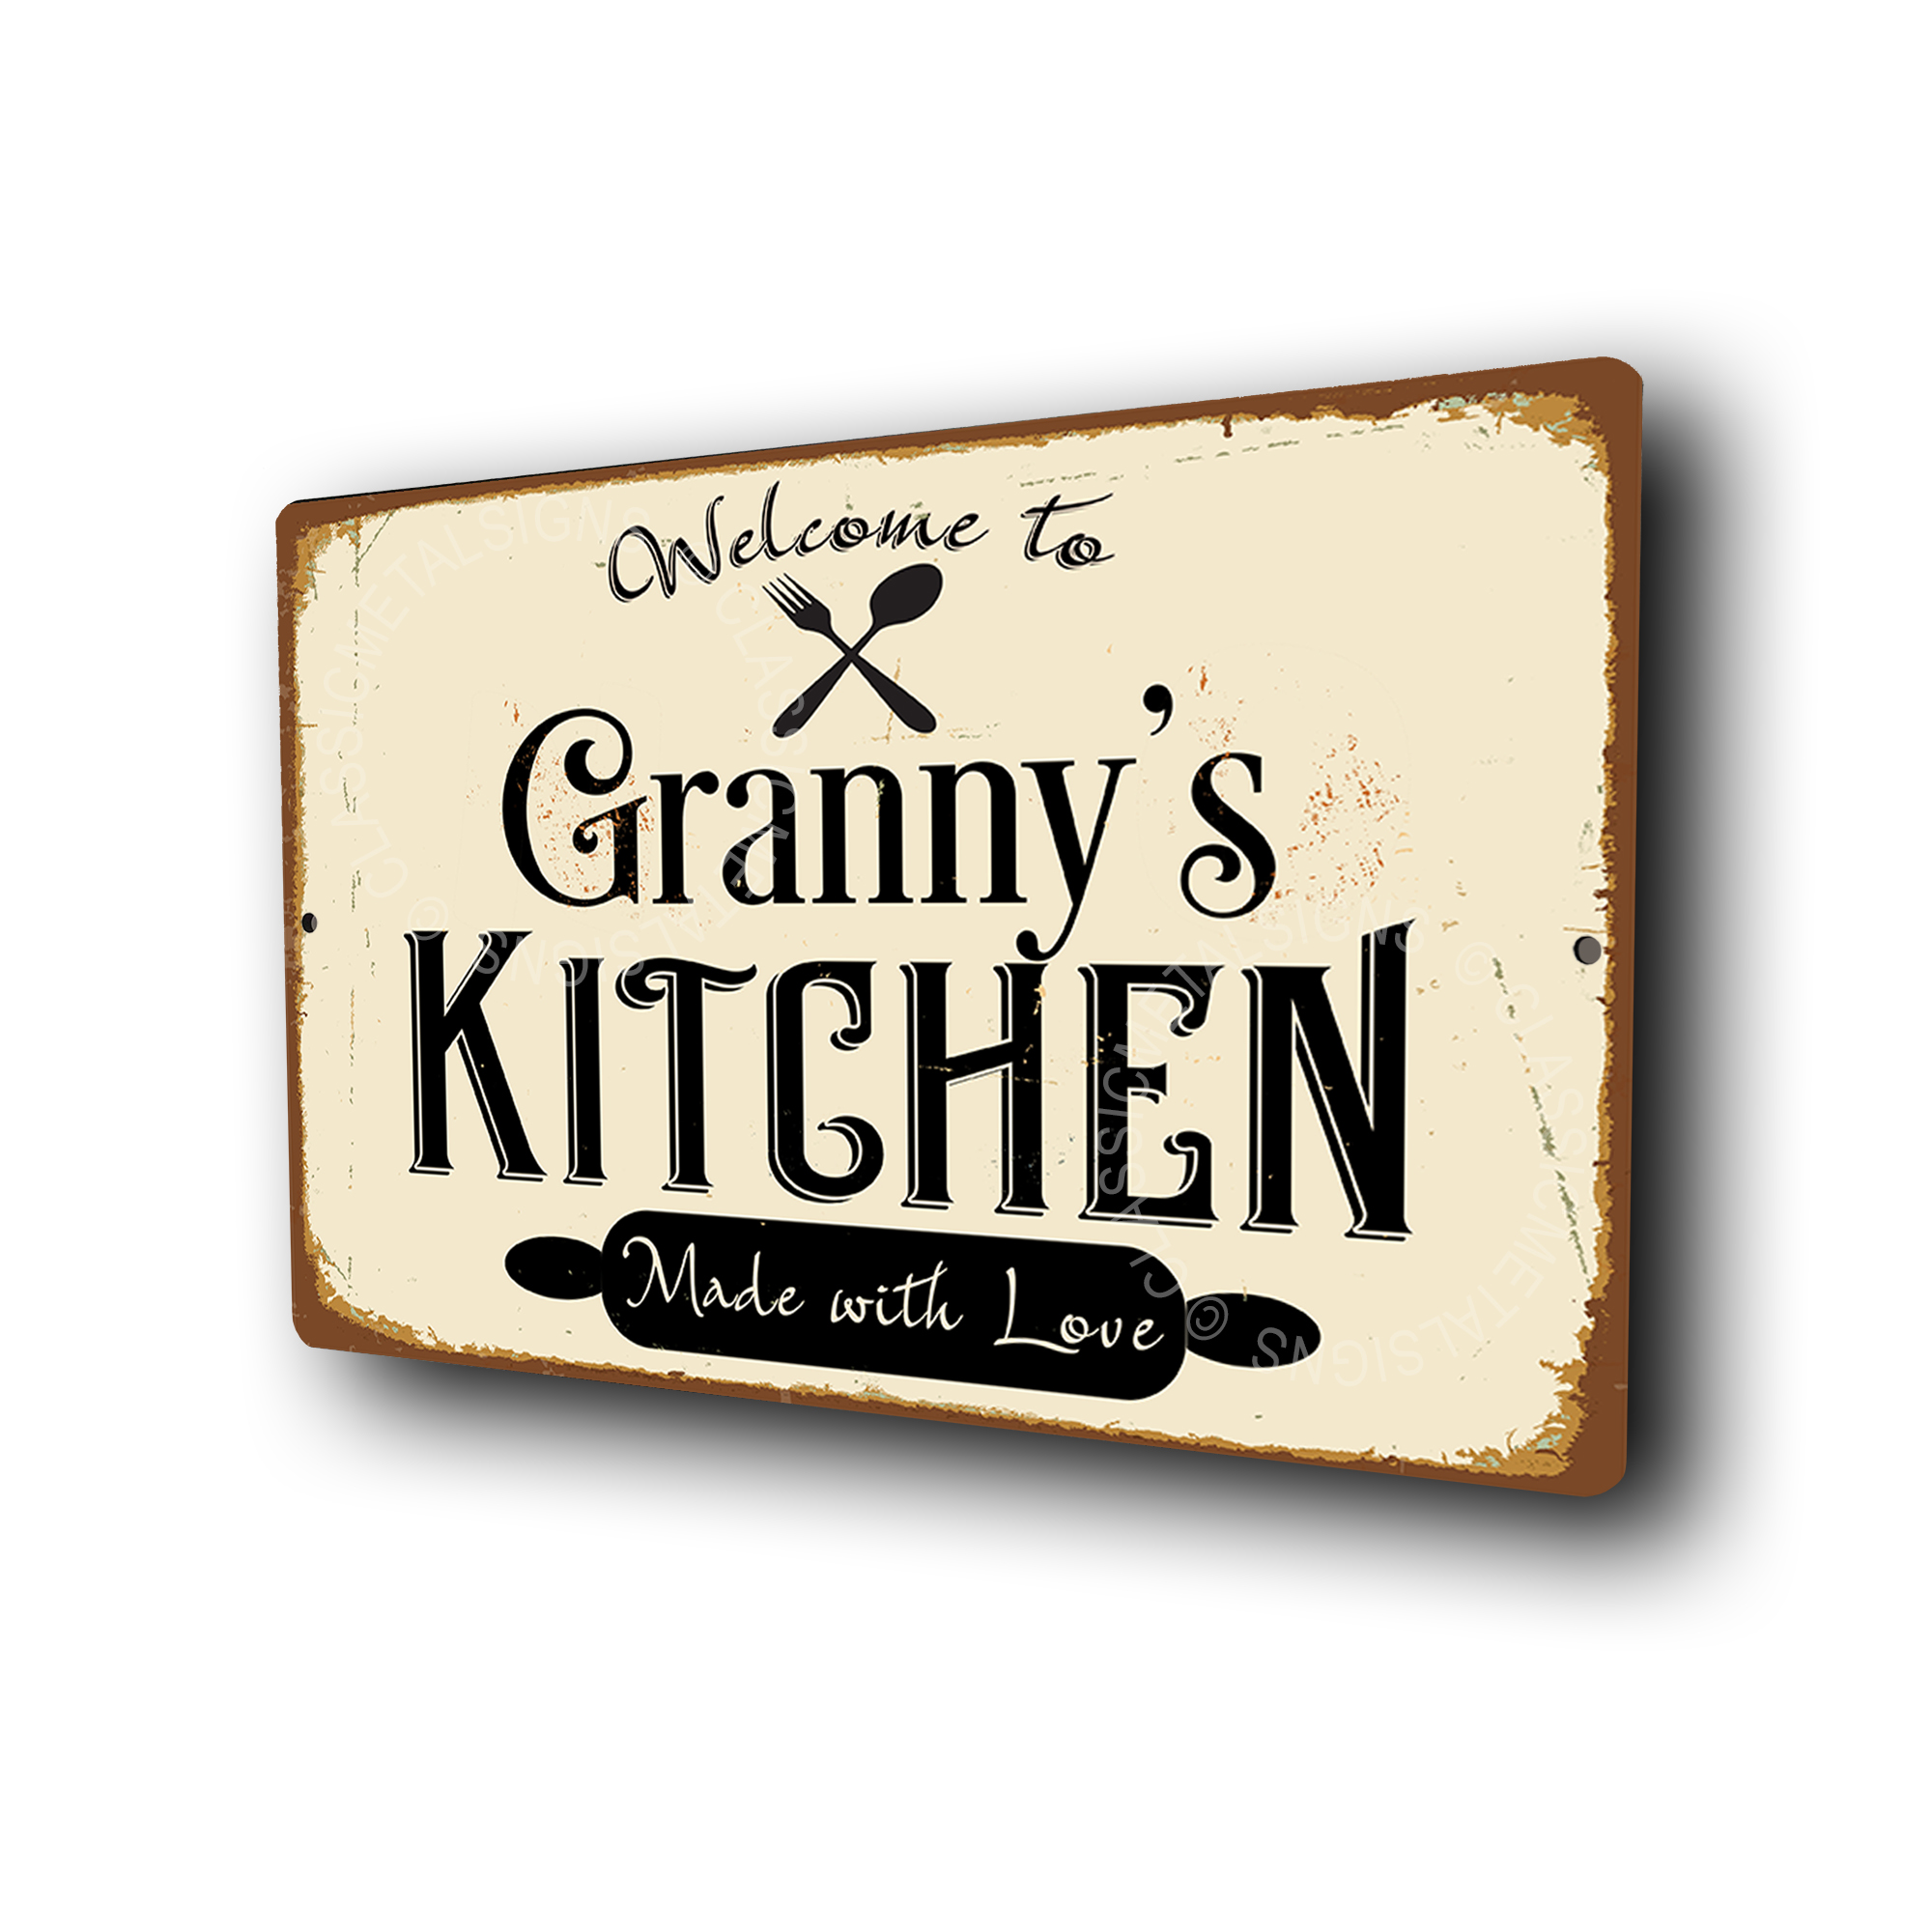 Granny's Kitchen Signs